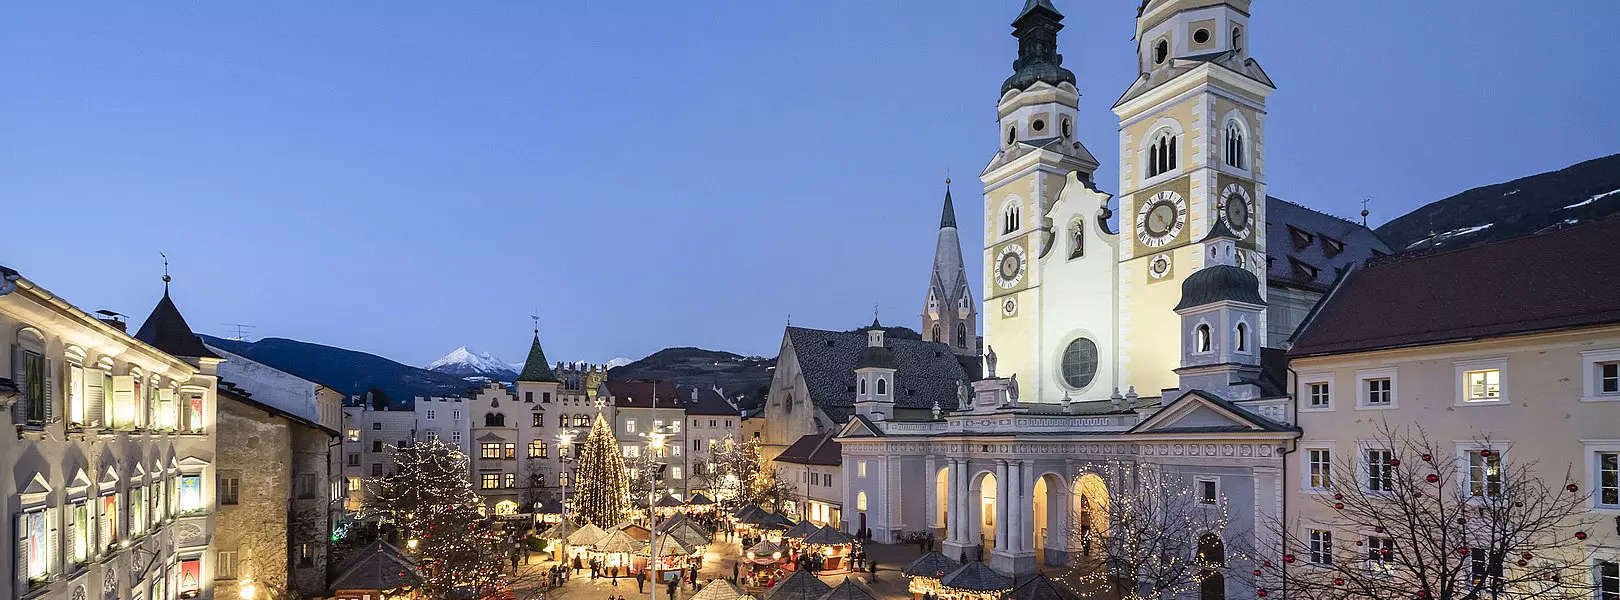 The Brixen Christmas Market